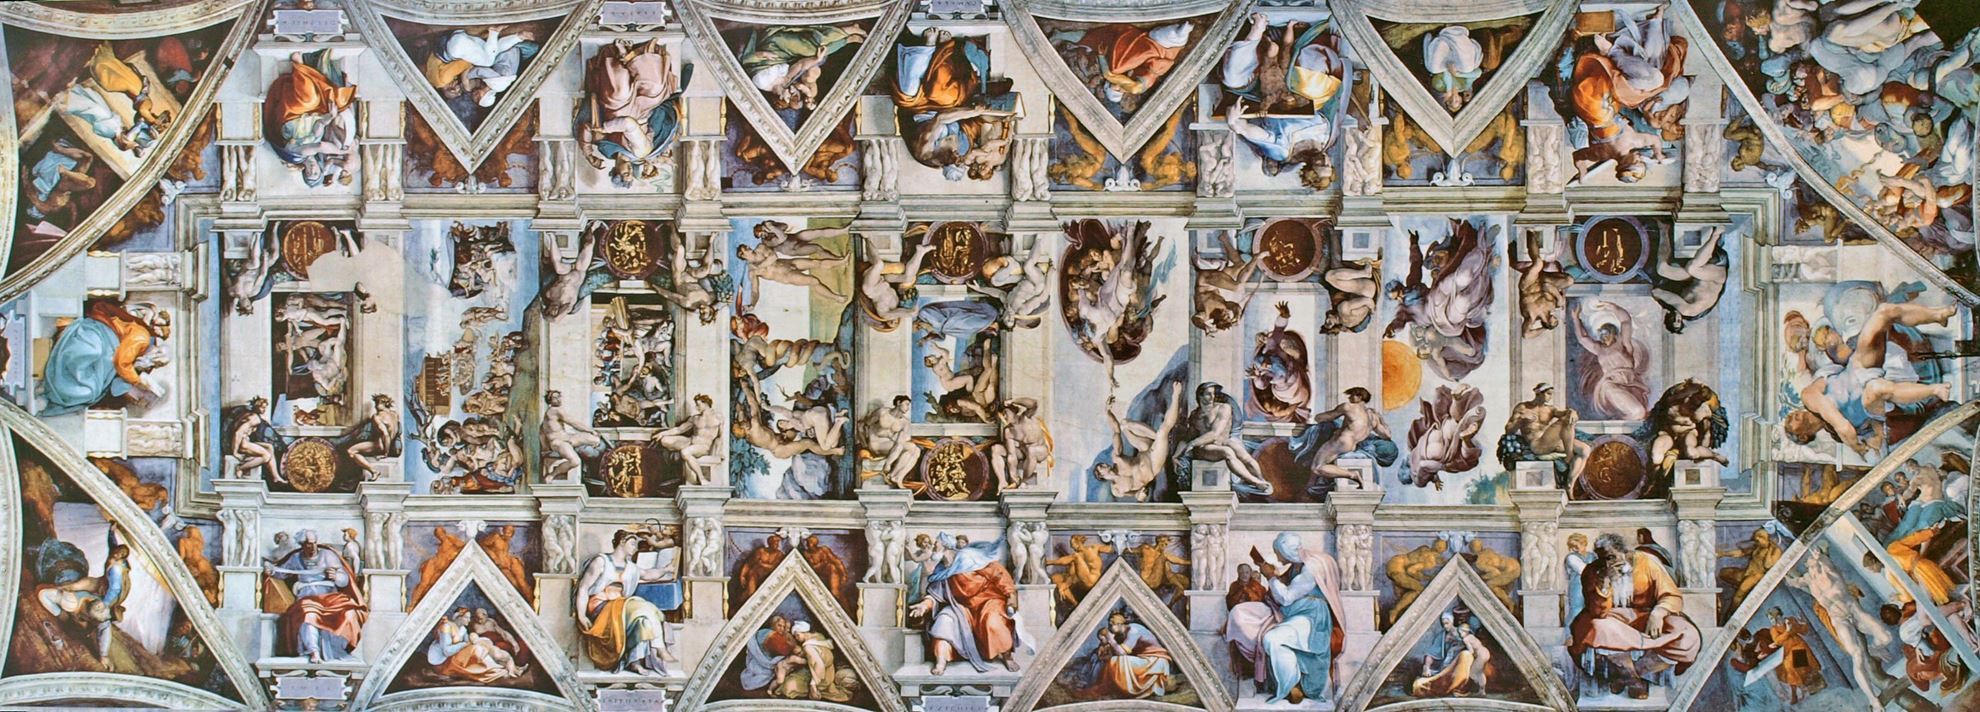 The Sistine Chapel Ceiling Frescoes